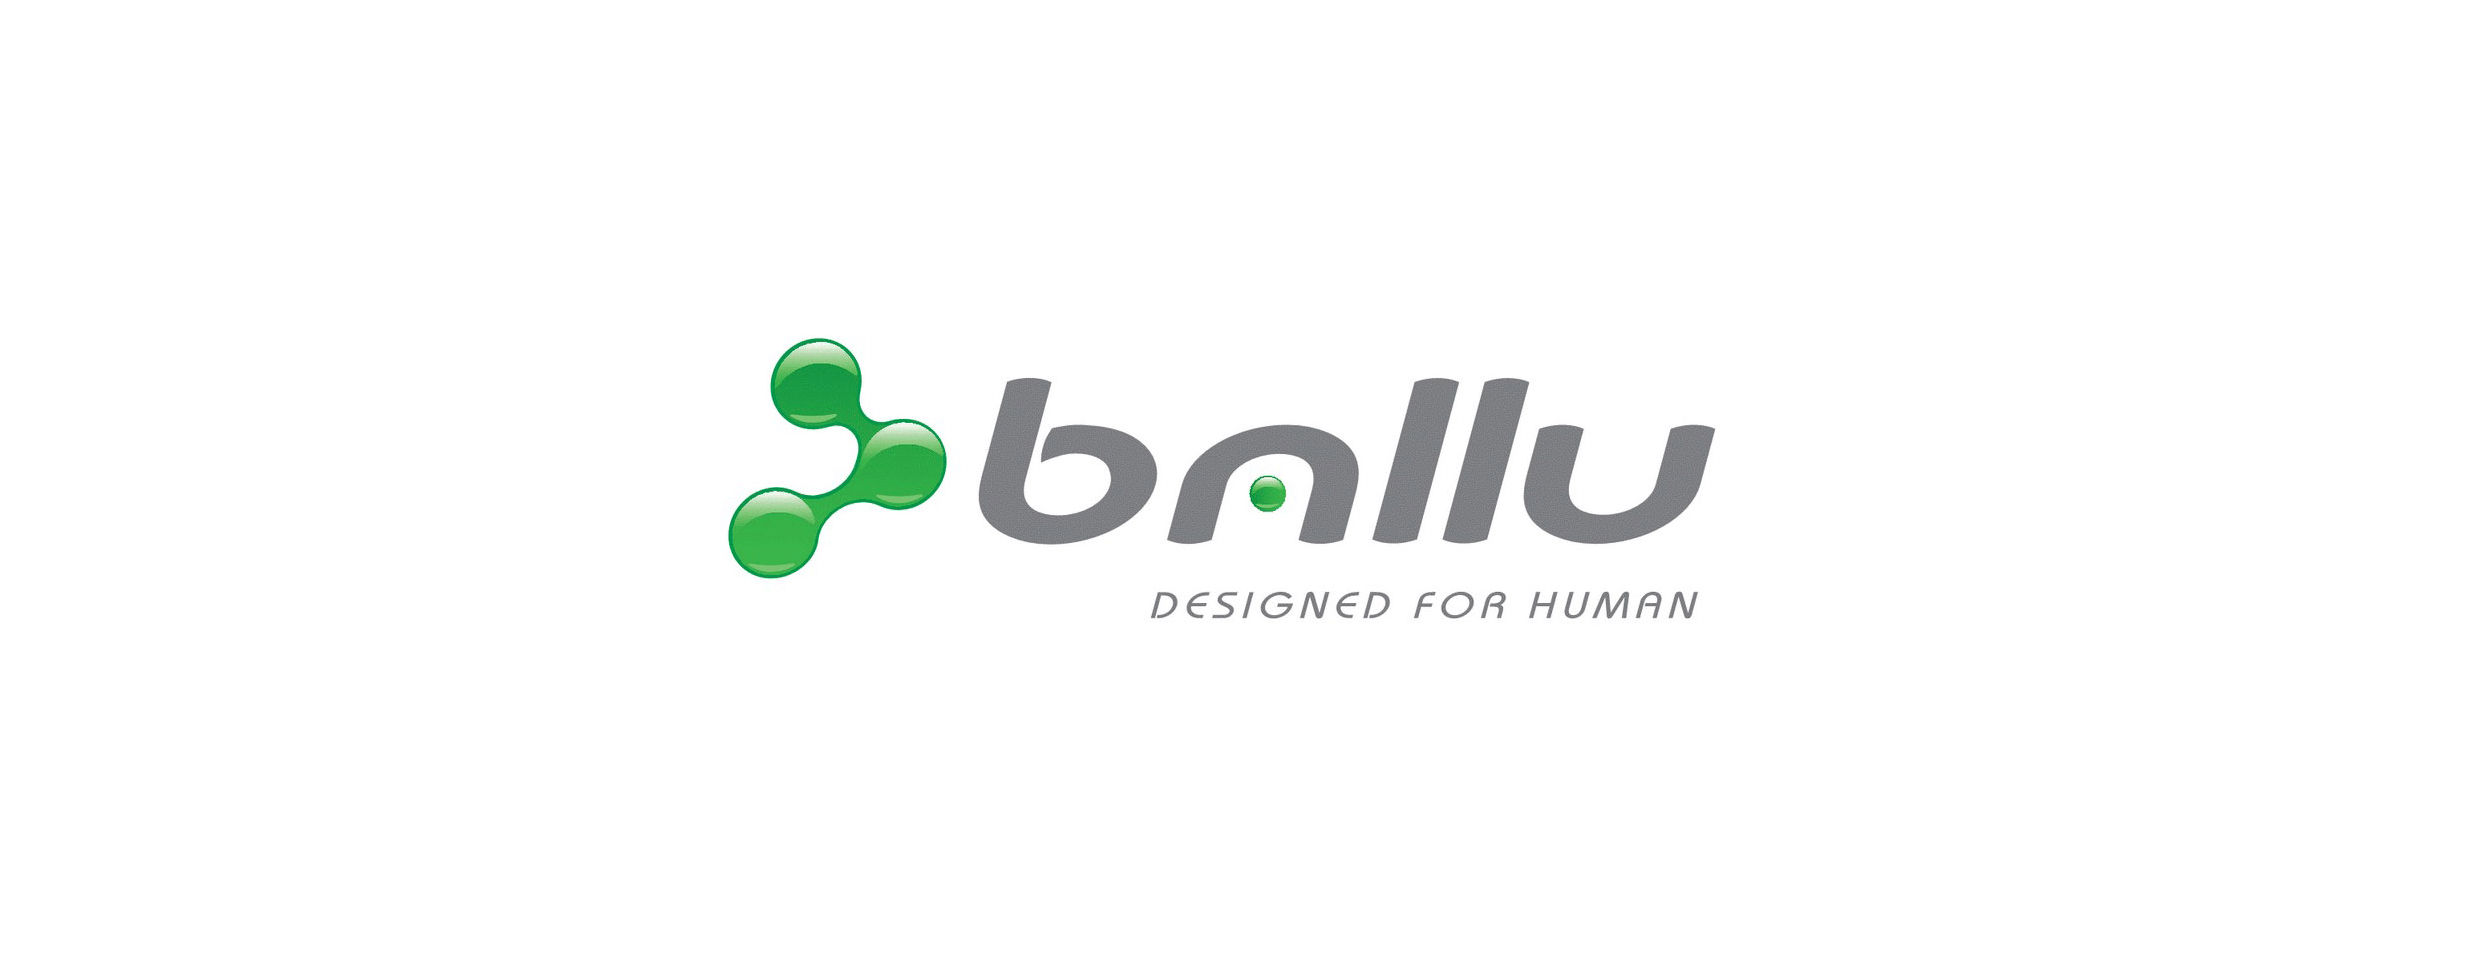 Ball U Logo - Error codes of Ballu air conditioners/ KONDICIONERINFO/ Ballu